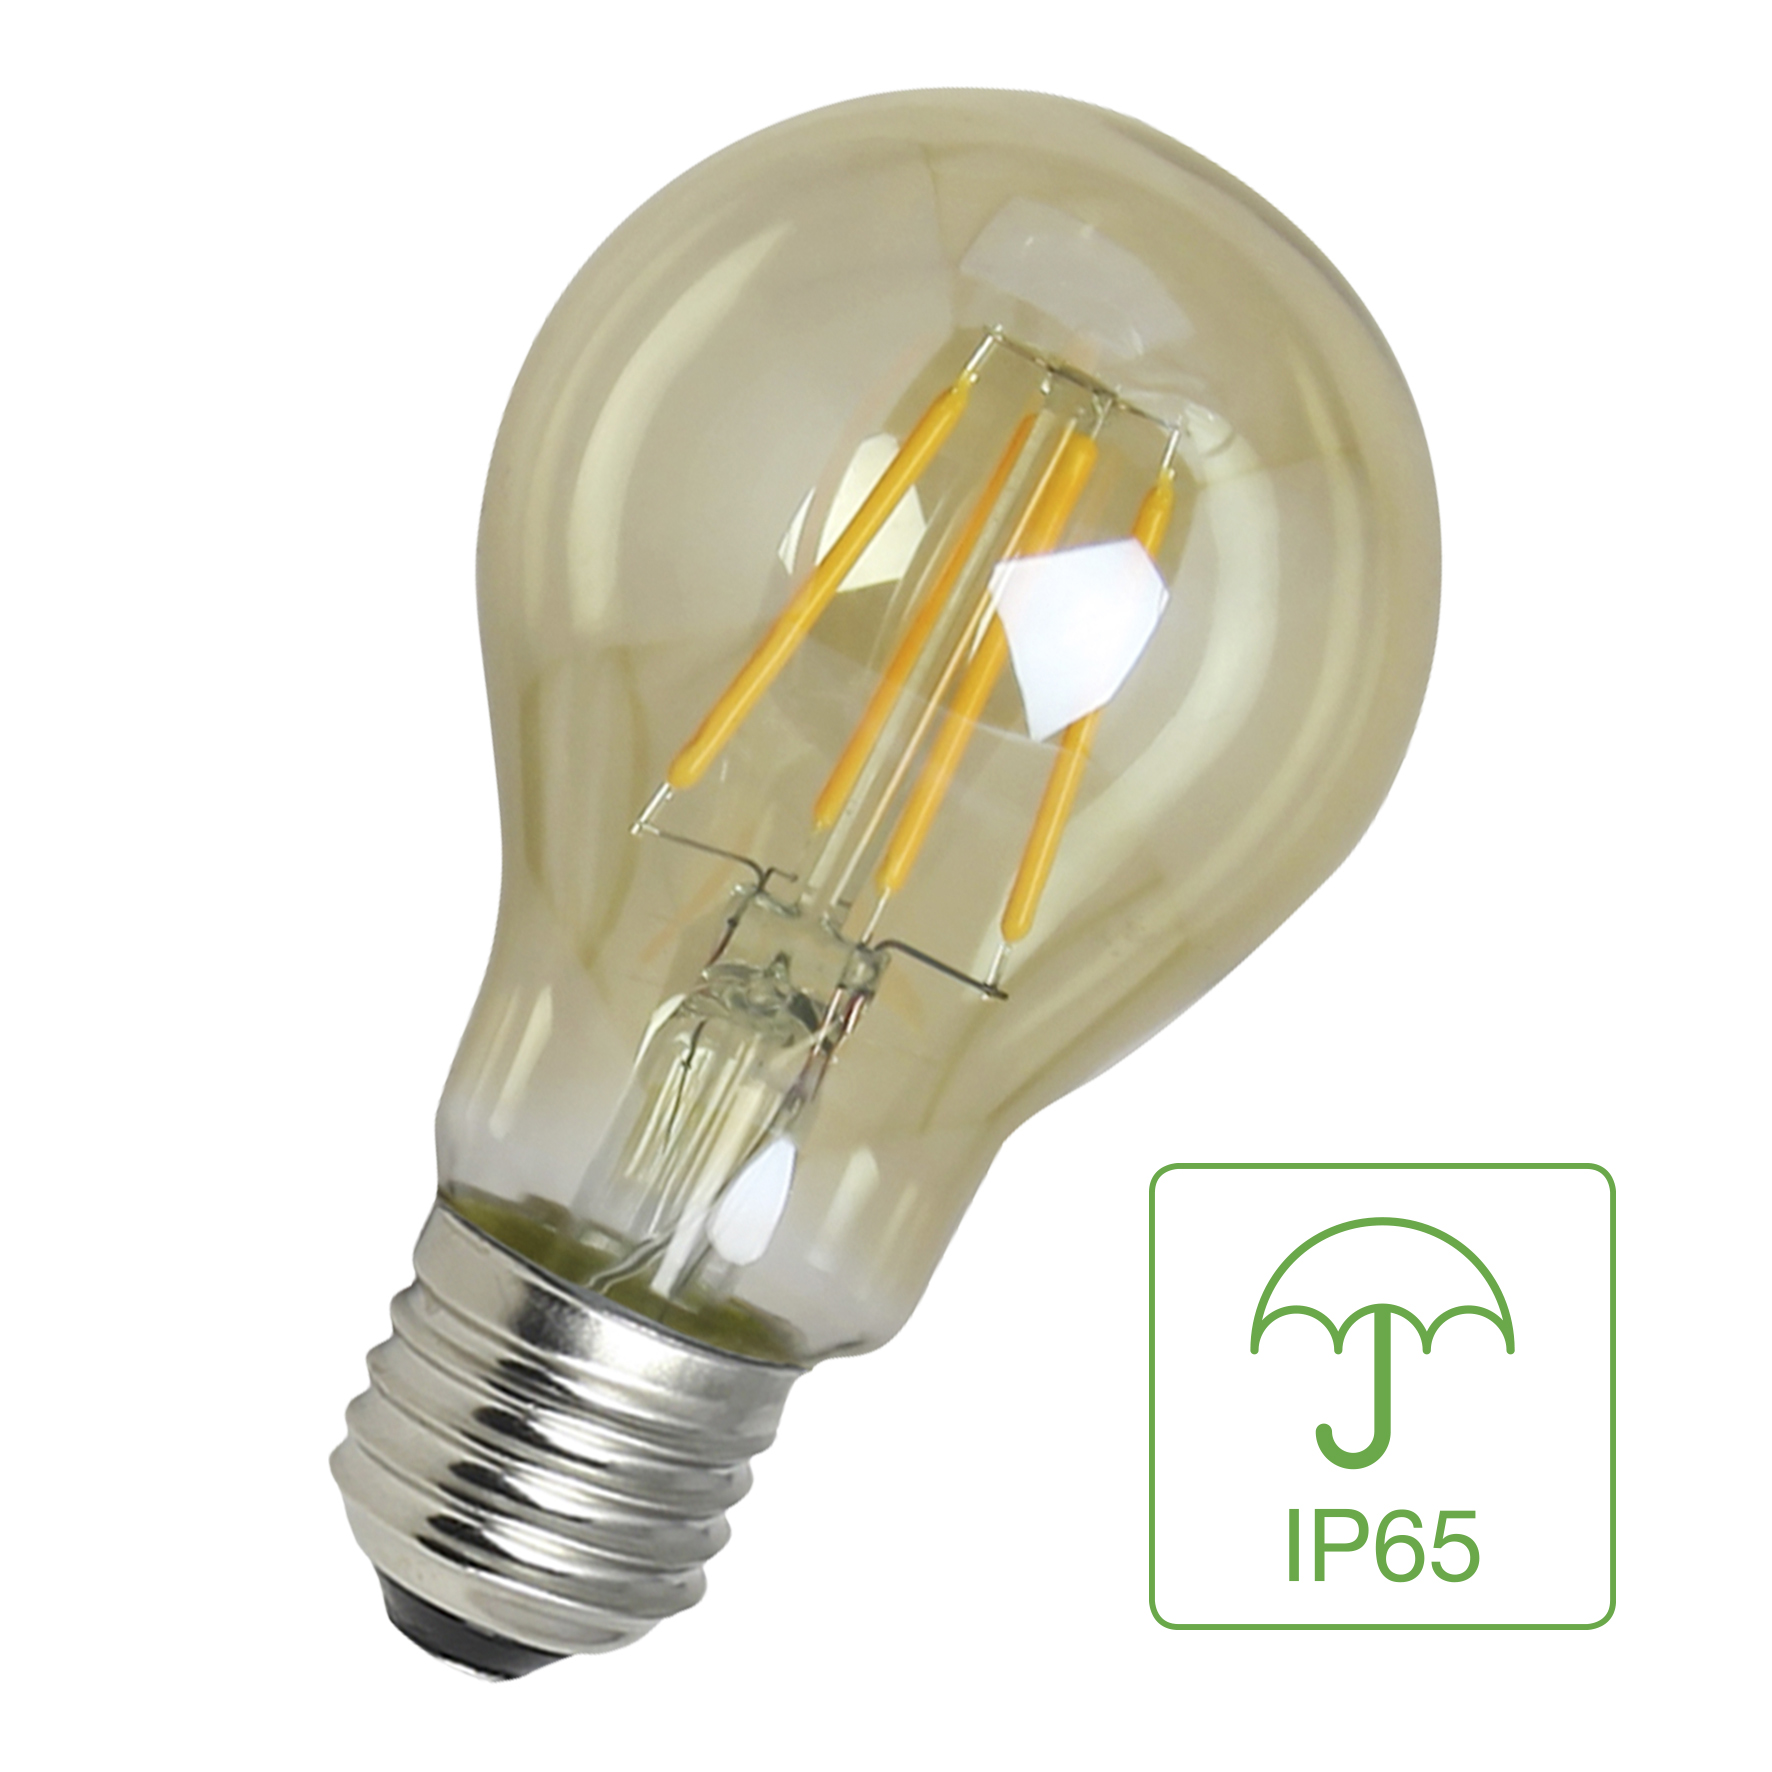 IP65 Outdoor filament